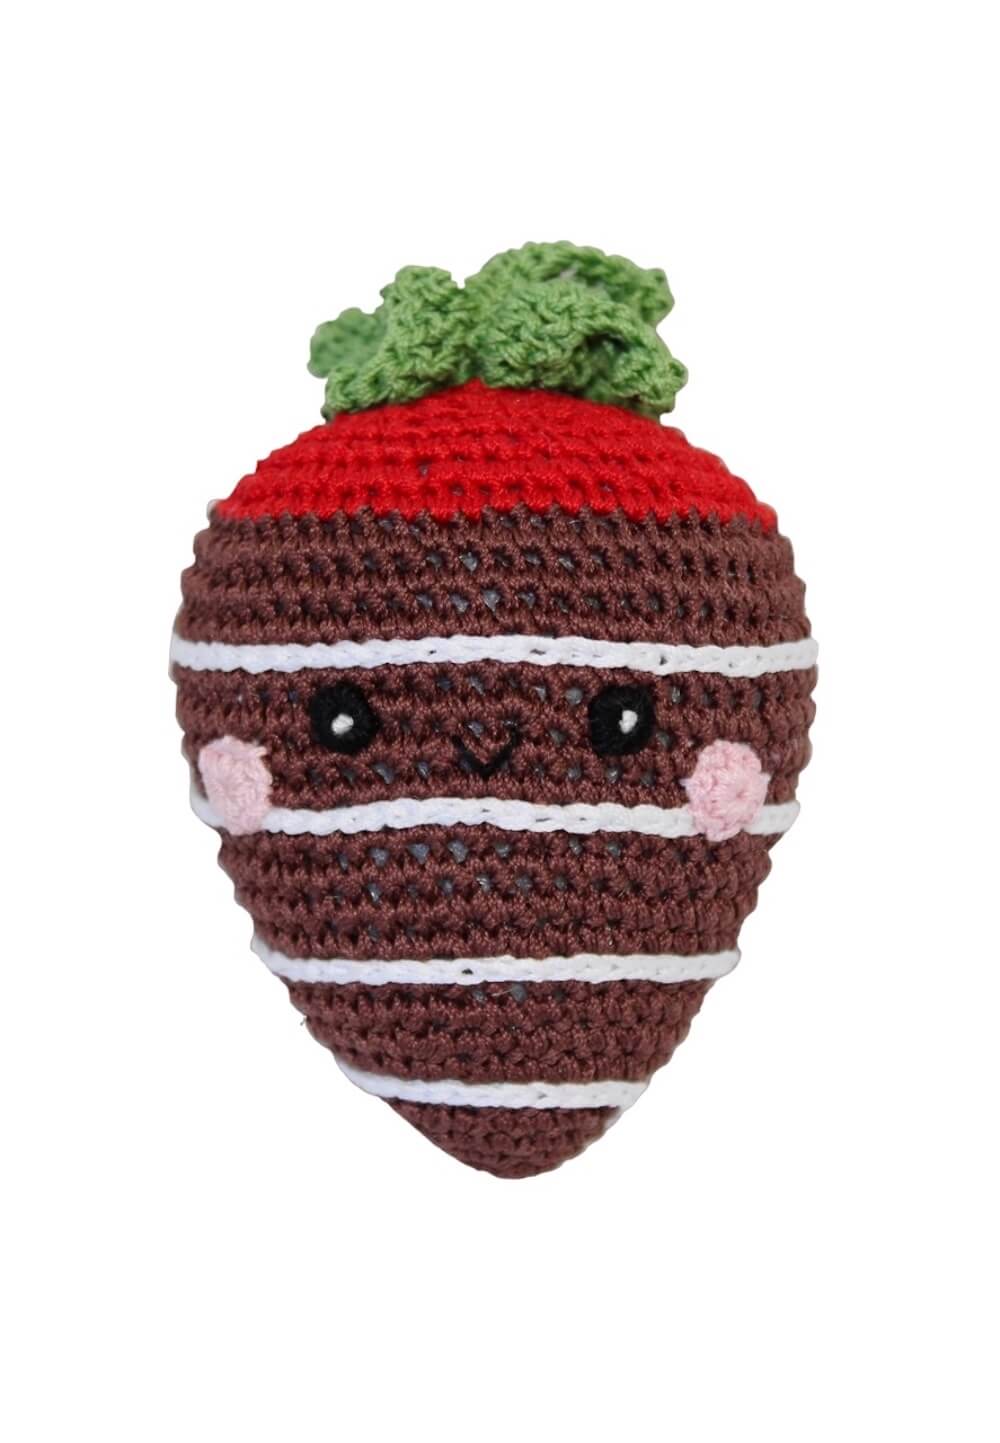 Knit Knacks &quot;Milk Chocolate Strawberry&quot; handmade organic cotton dog toy. Smiling anthropomorphic strawberry dipped in milk chocolate.